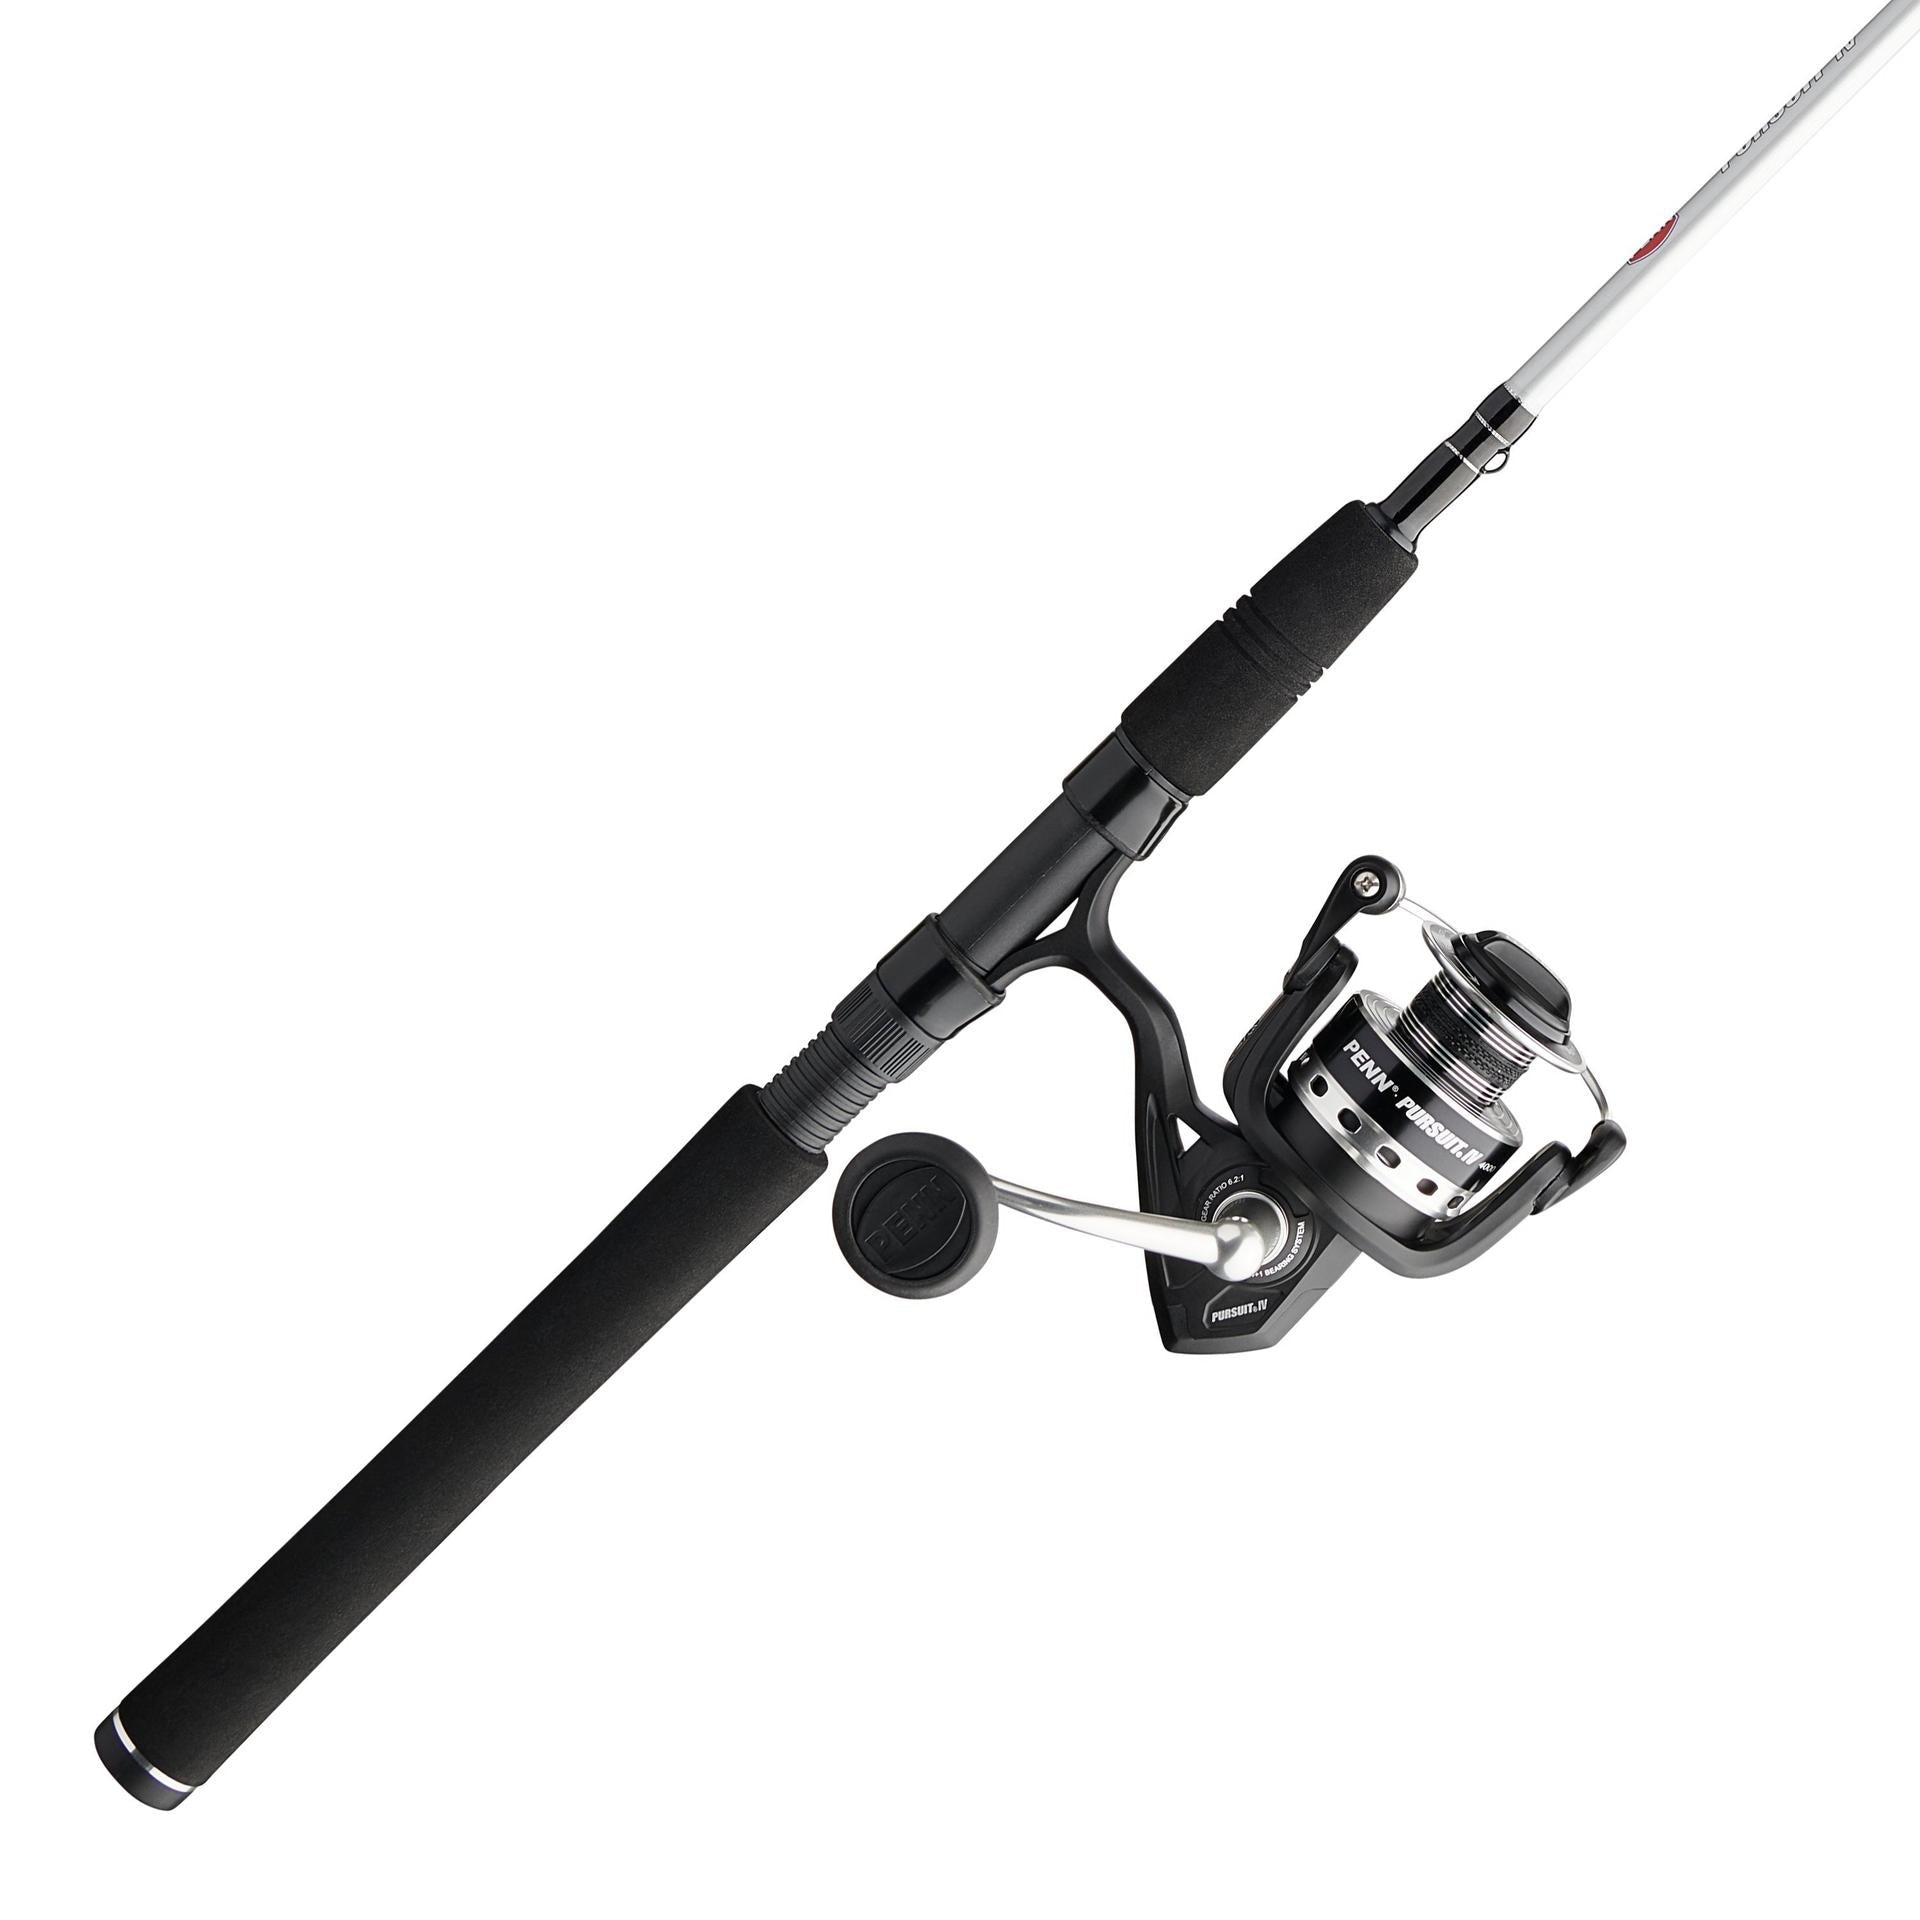 $26/mo - Finance Penn Battle III Spinning Reel and Fishing Rod Combo